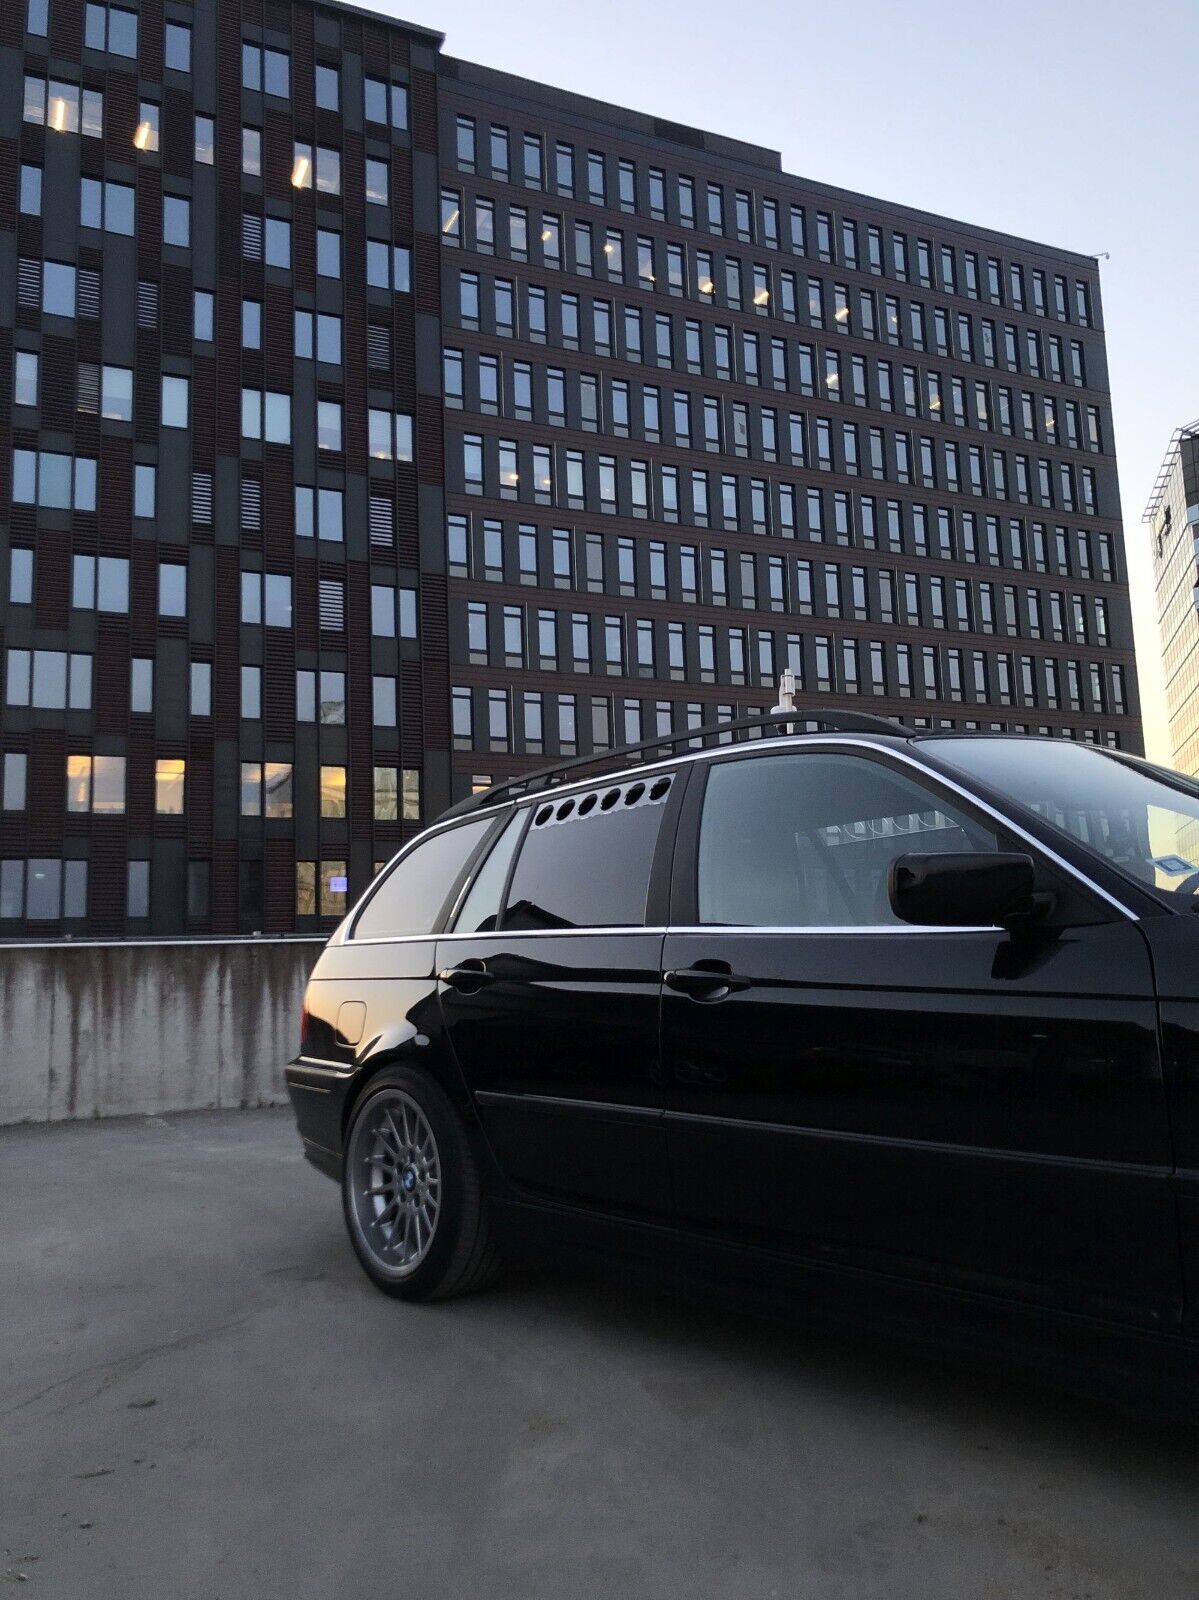 Black Rear Window Vent Set Rally Drift Stance Visor Set (Fits BMW E46 Touring Wagon)